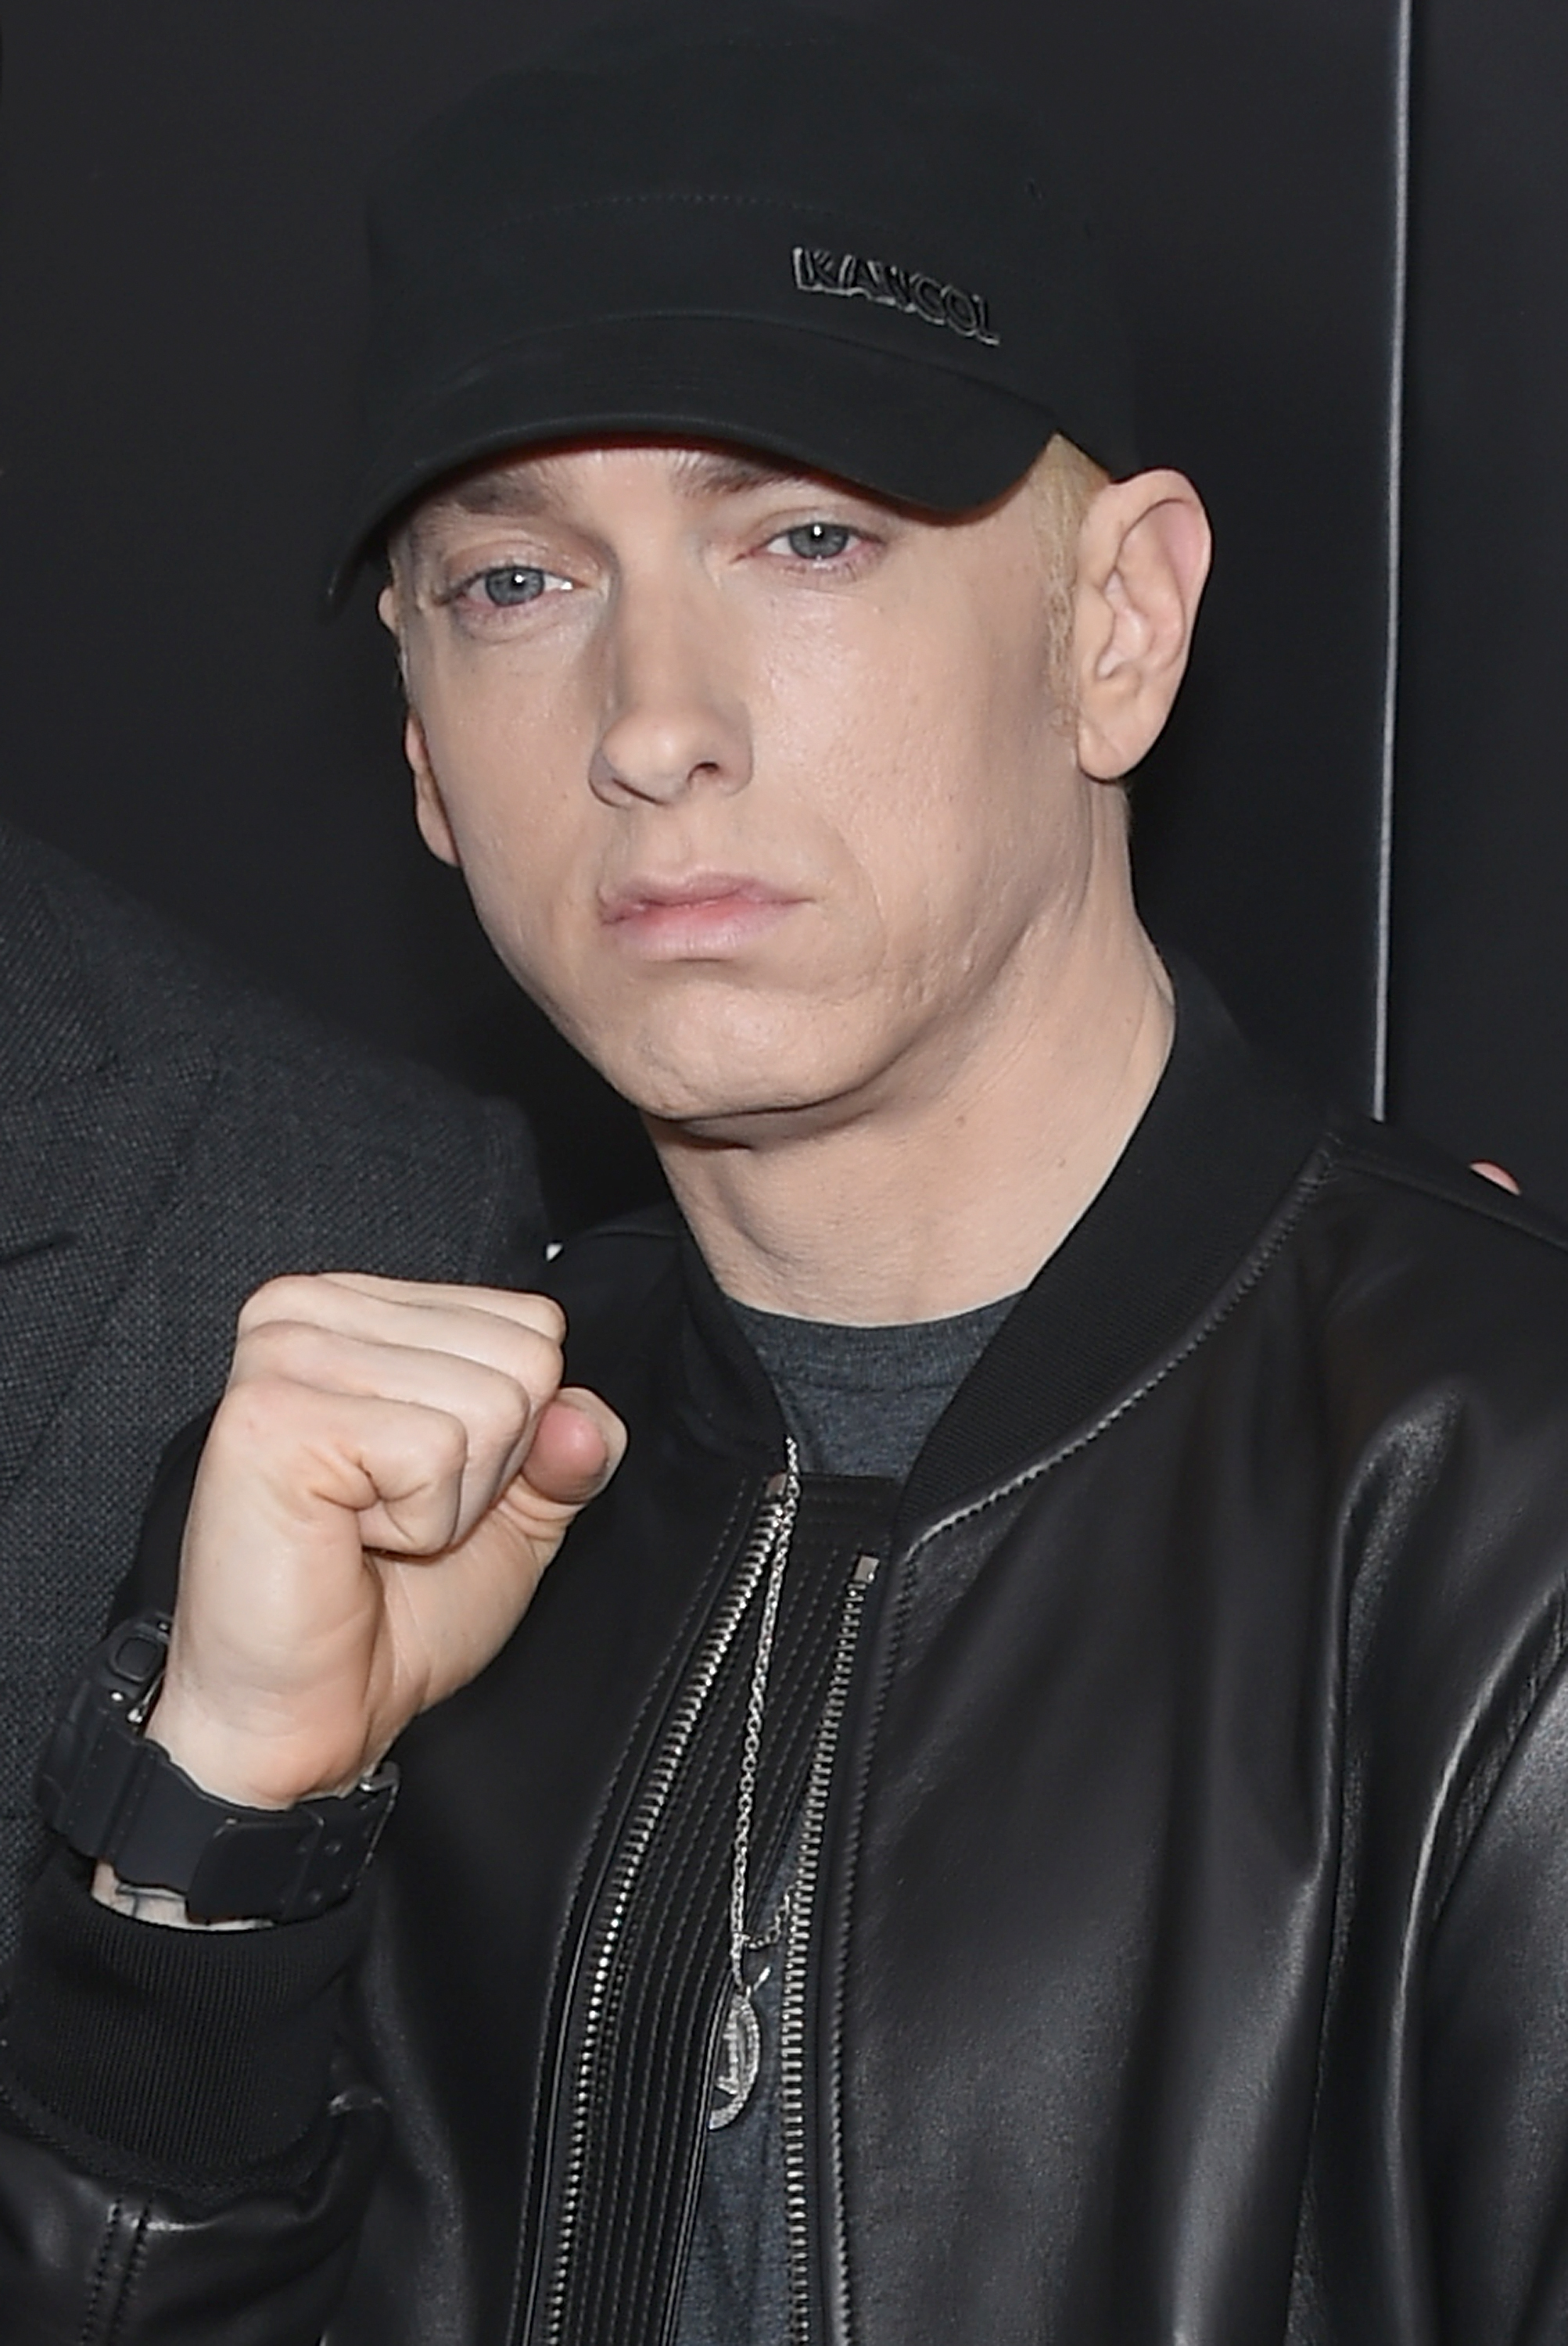 The jacket Detroit star Eminem in her video clip When I m gone